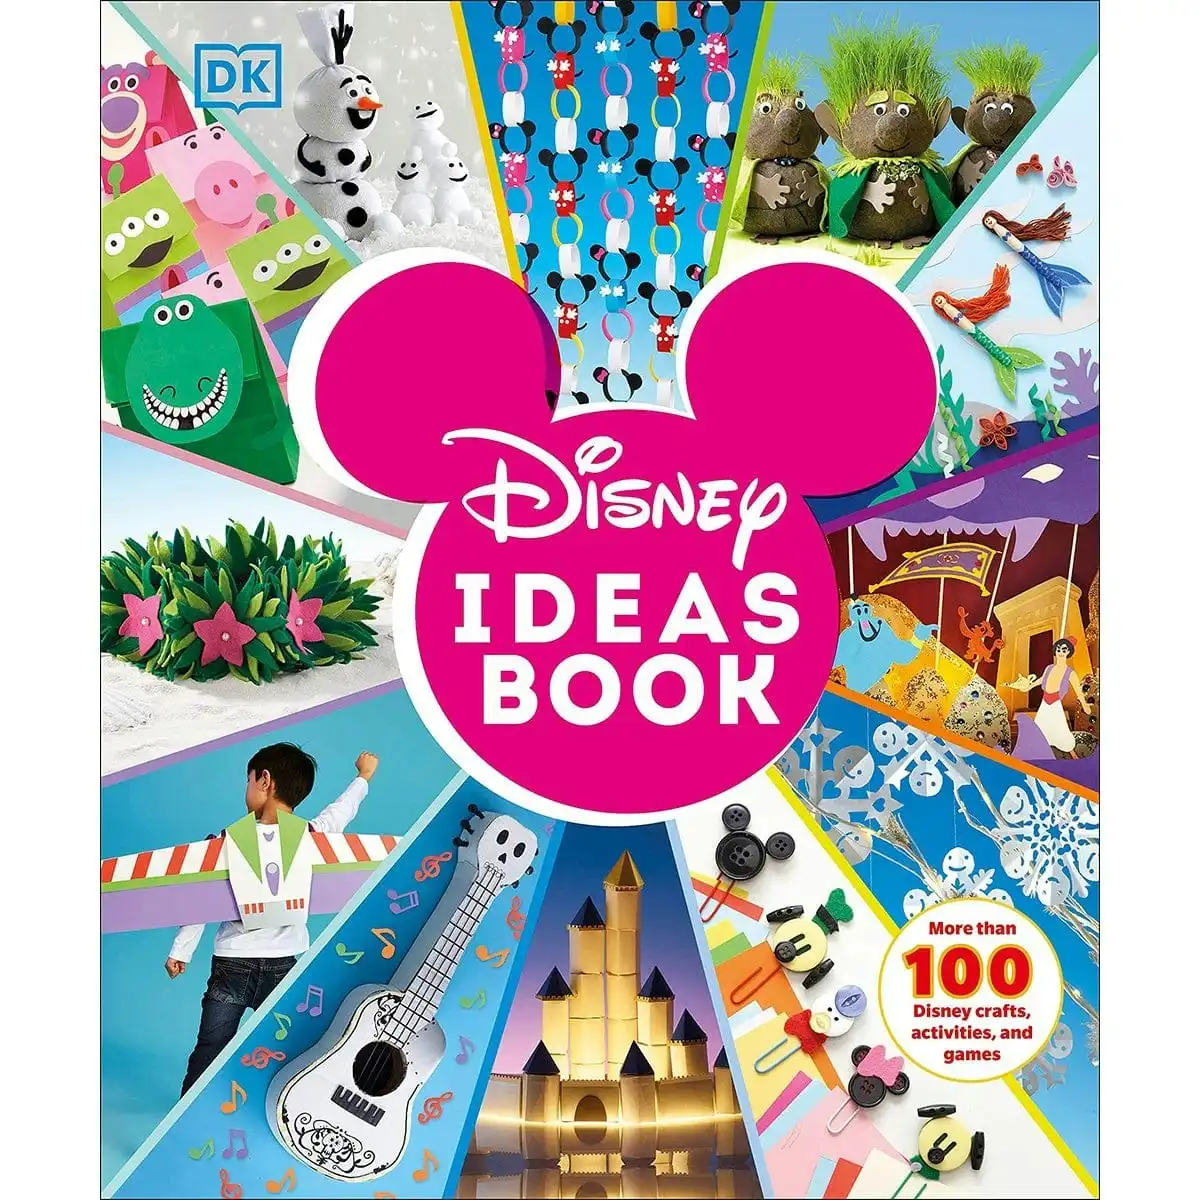 Promotional Disney Ideas Book: Crafts Activities & Games